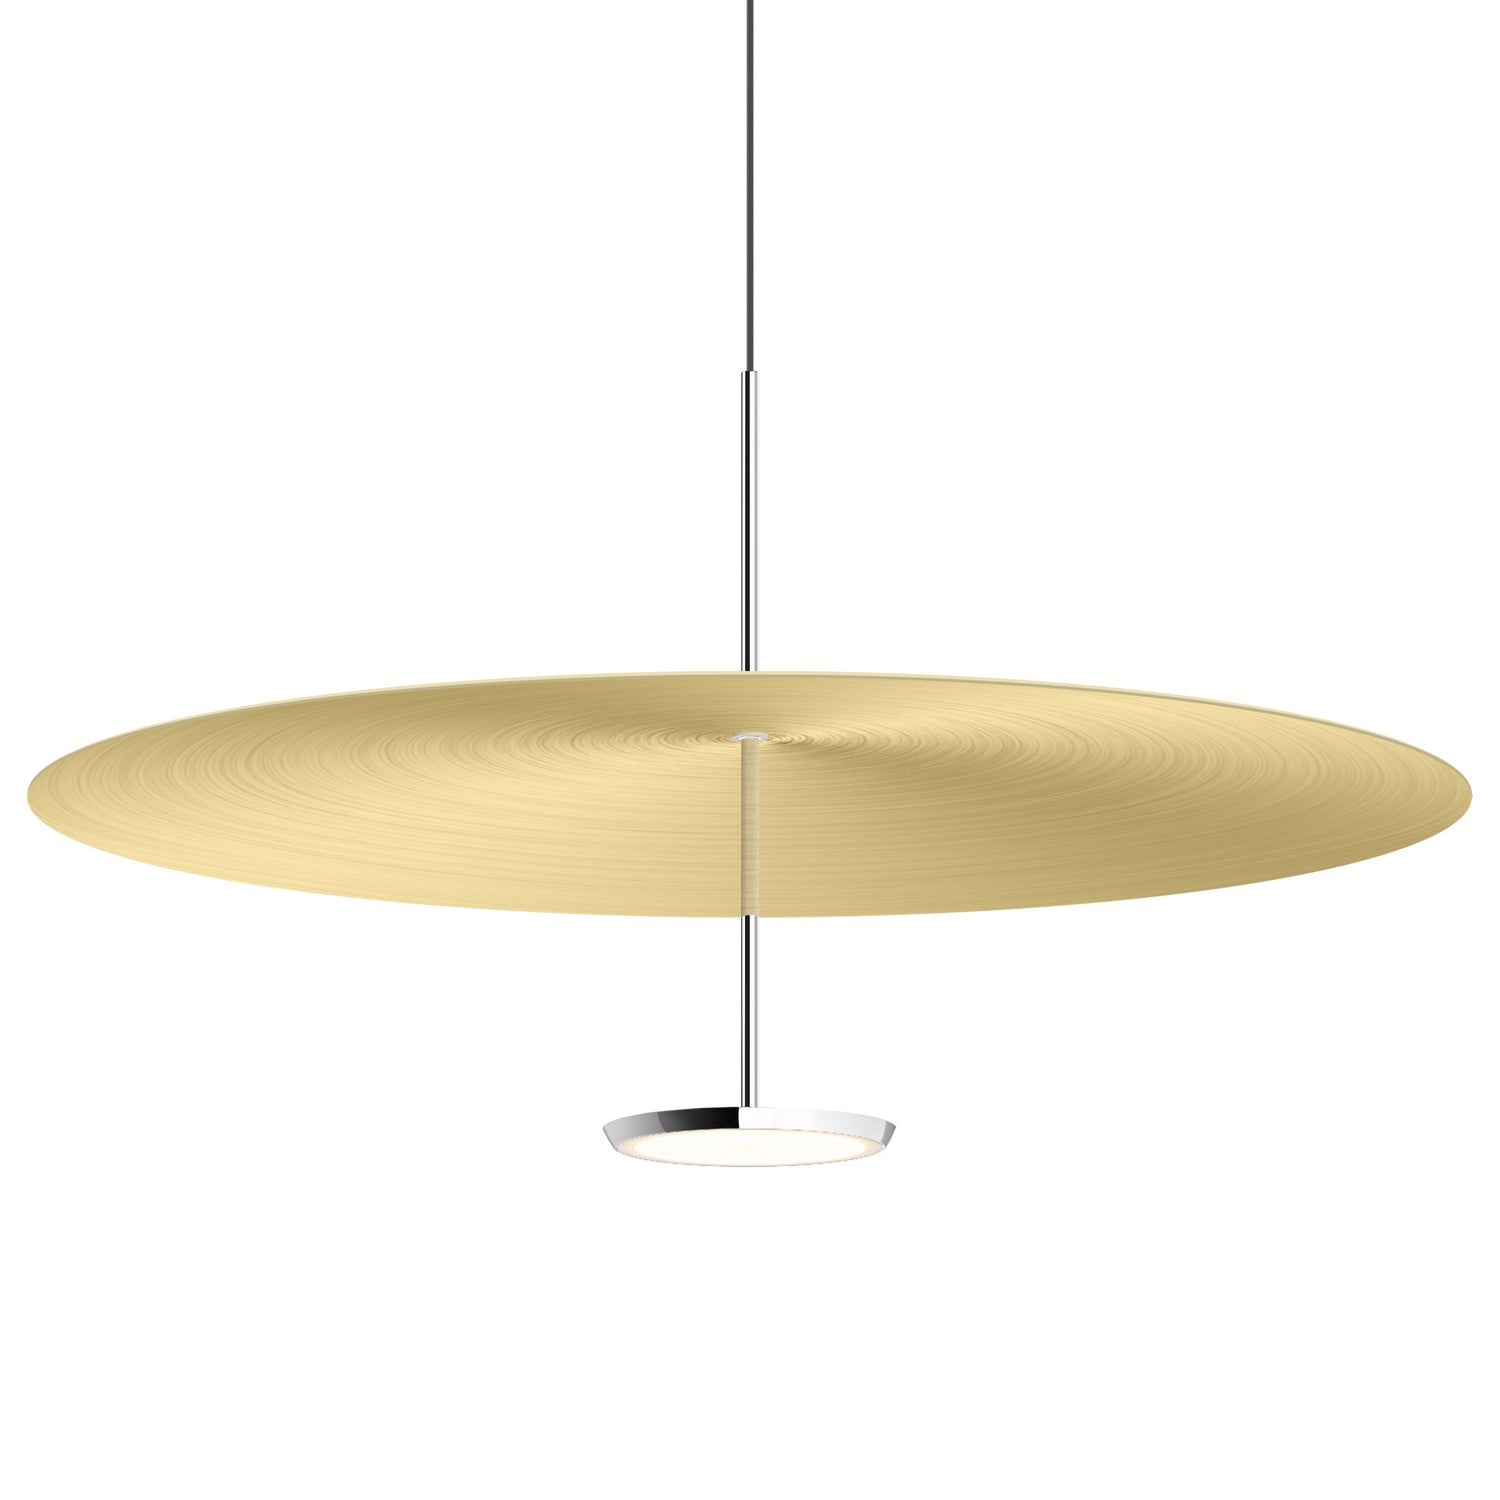 Pablo Designs - LED Pendant - Sky - Brass/Chrome- Union Lighting Luminaires Decor